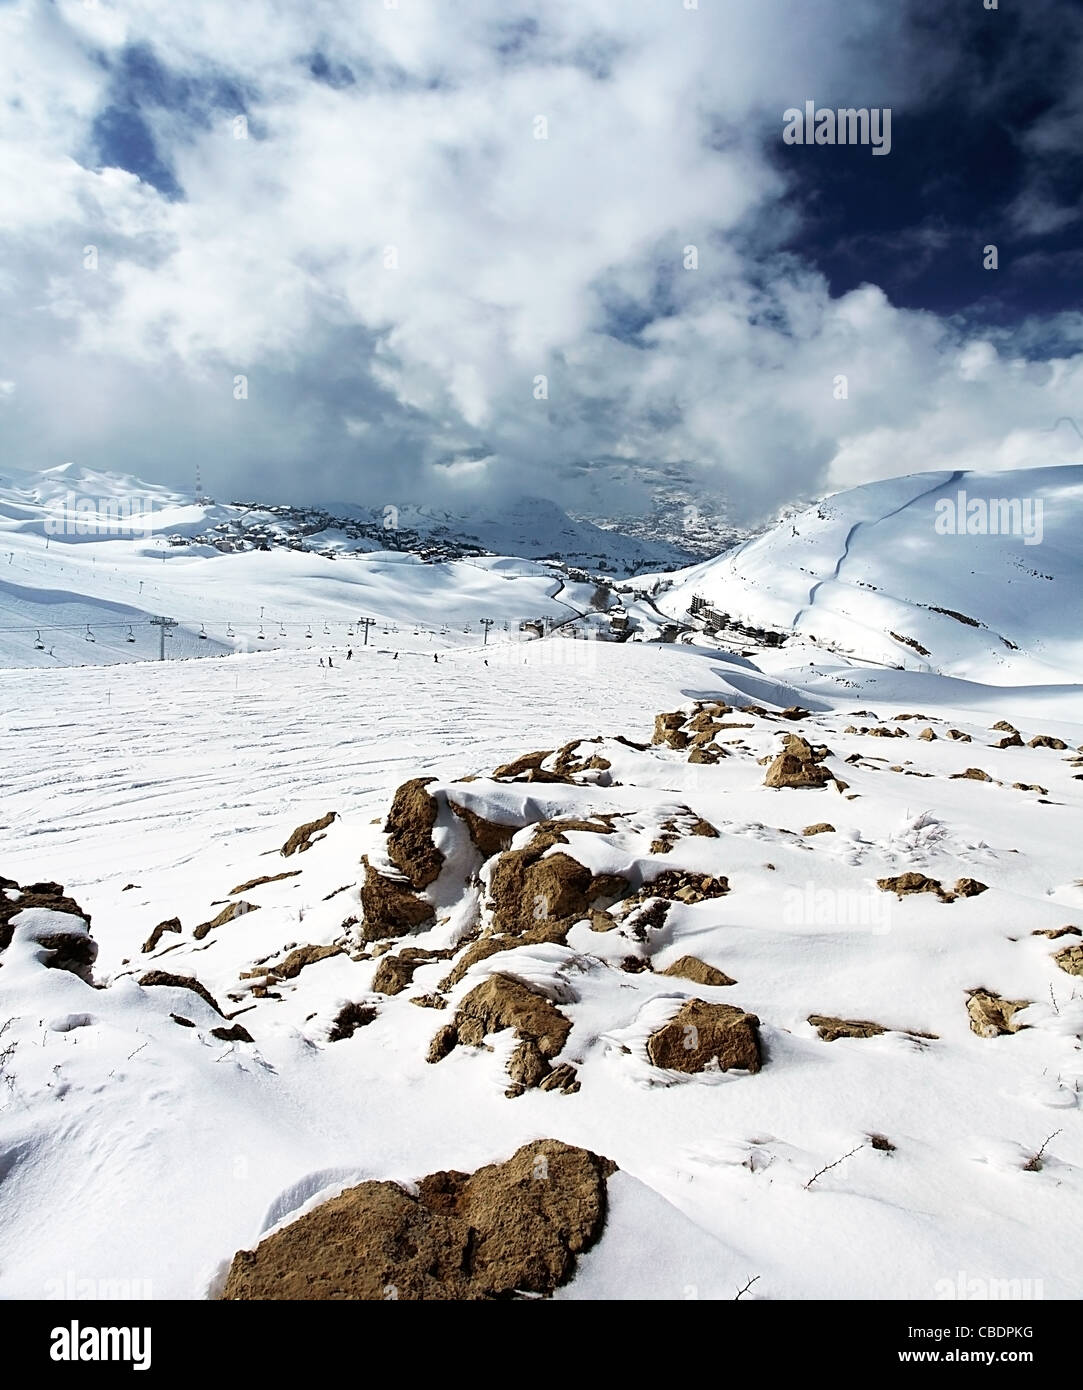 Paisaje invernal de alta montaña con ventisca de nieve y fresco, cielo azul, naturaleza hermosa imagen Foto de stock